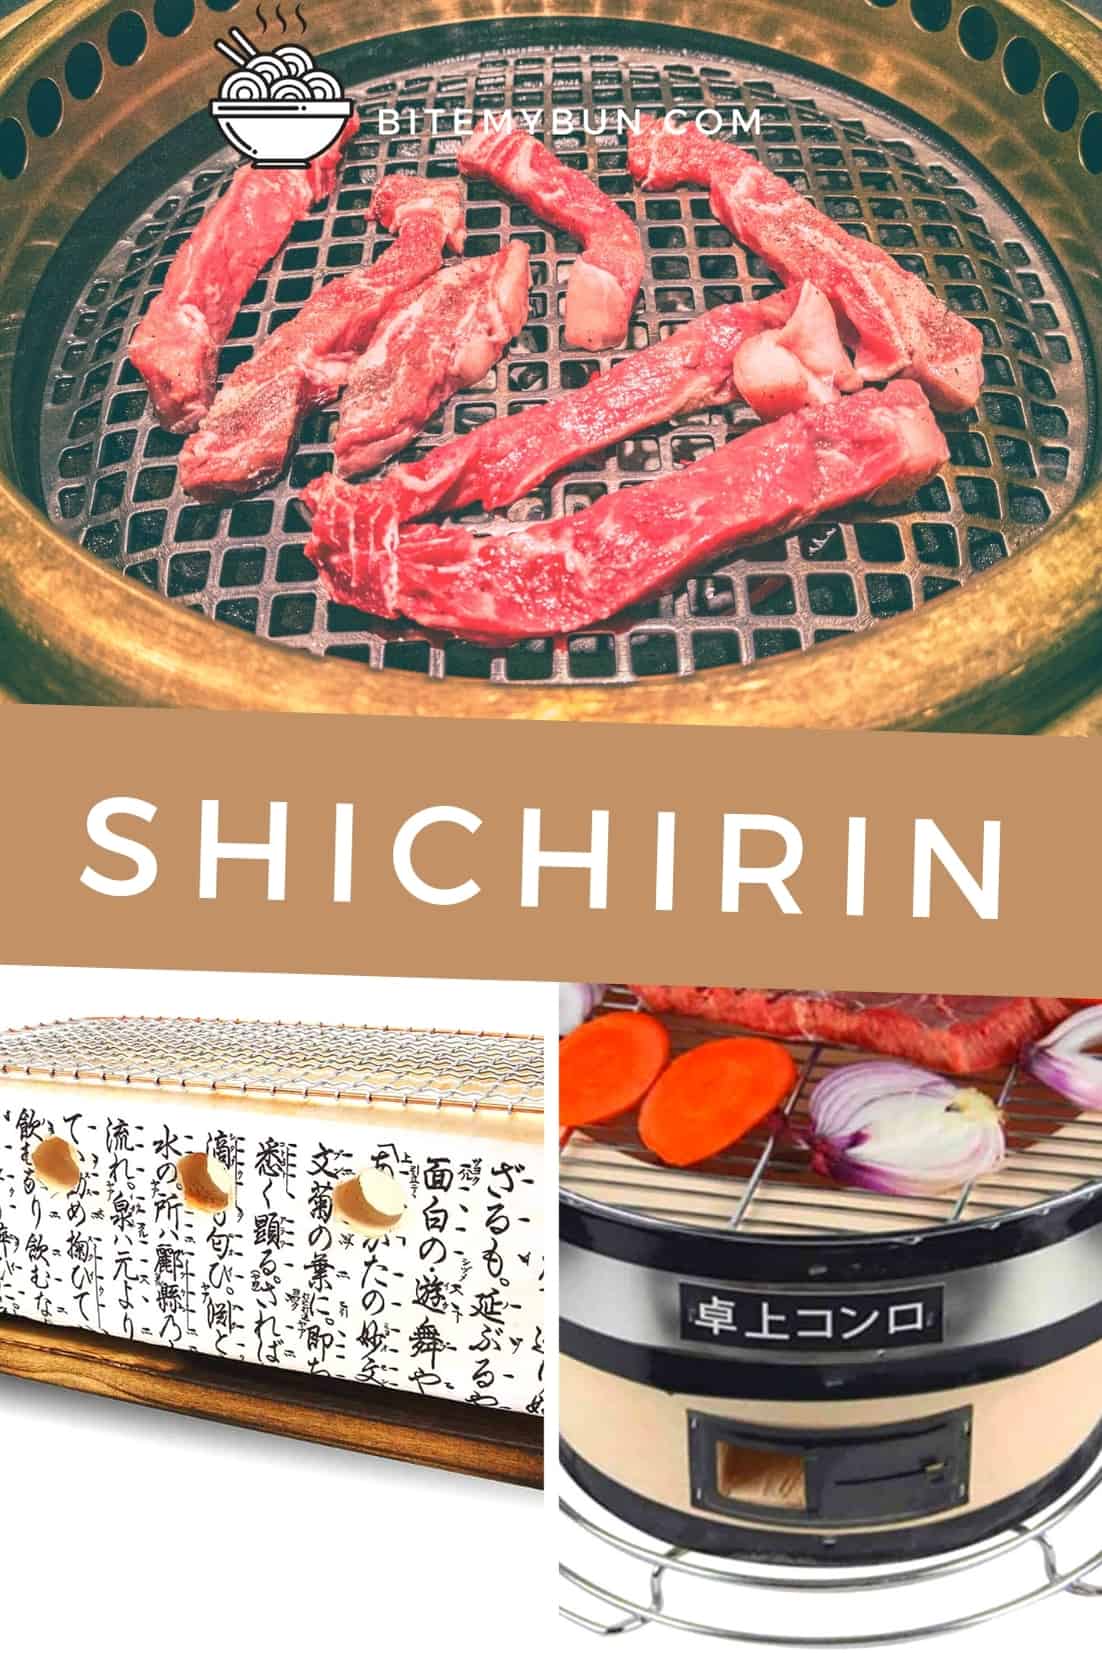 Best Shichirin grills reviewed